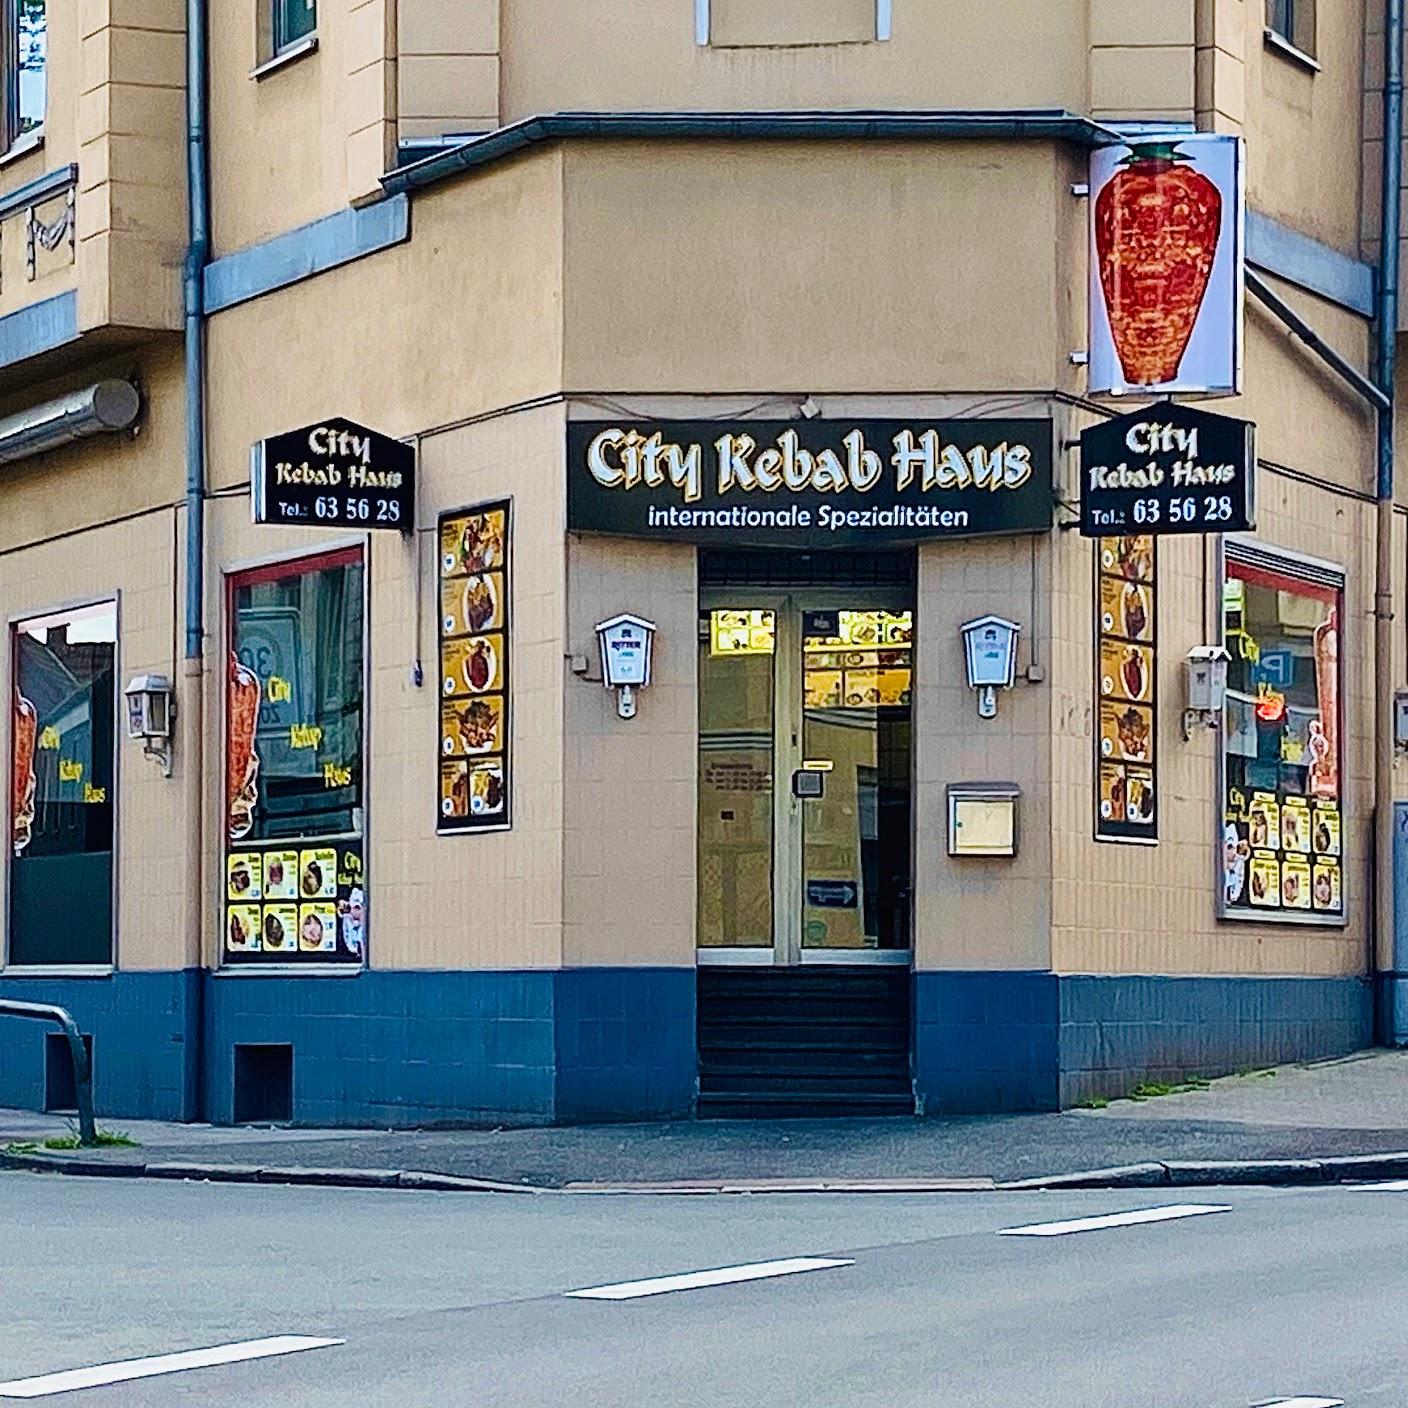 Restaurant "City Kebap Haus" in Dortmund